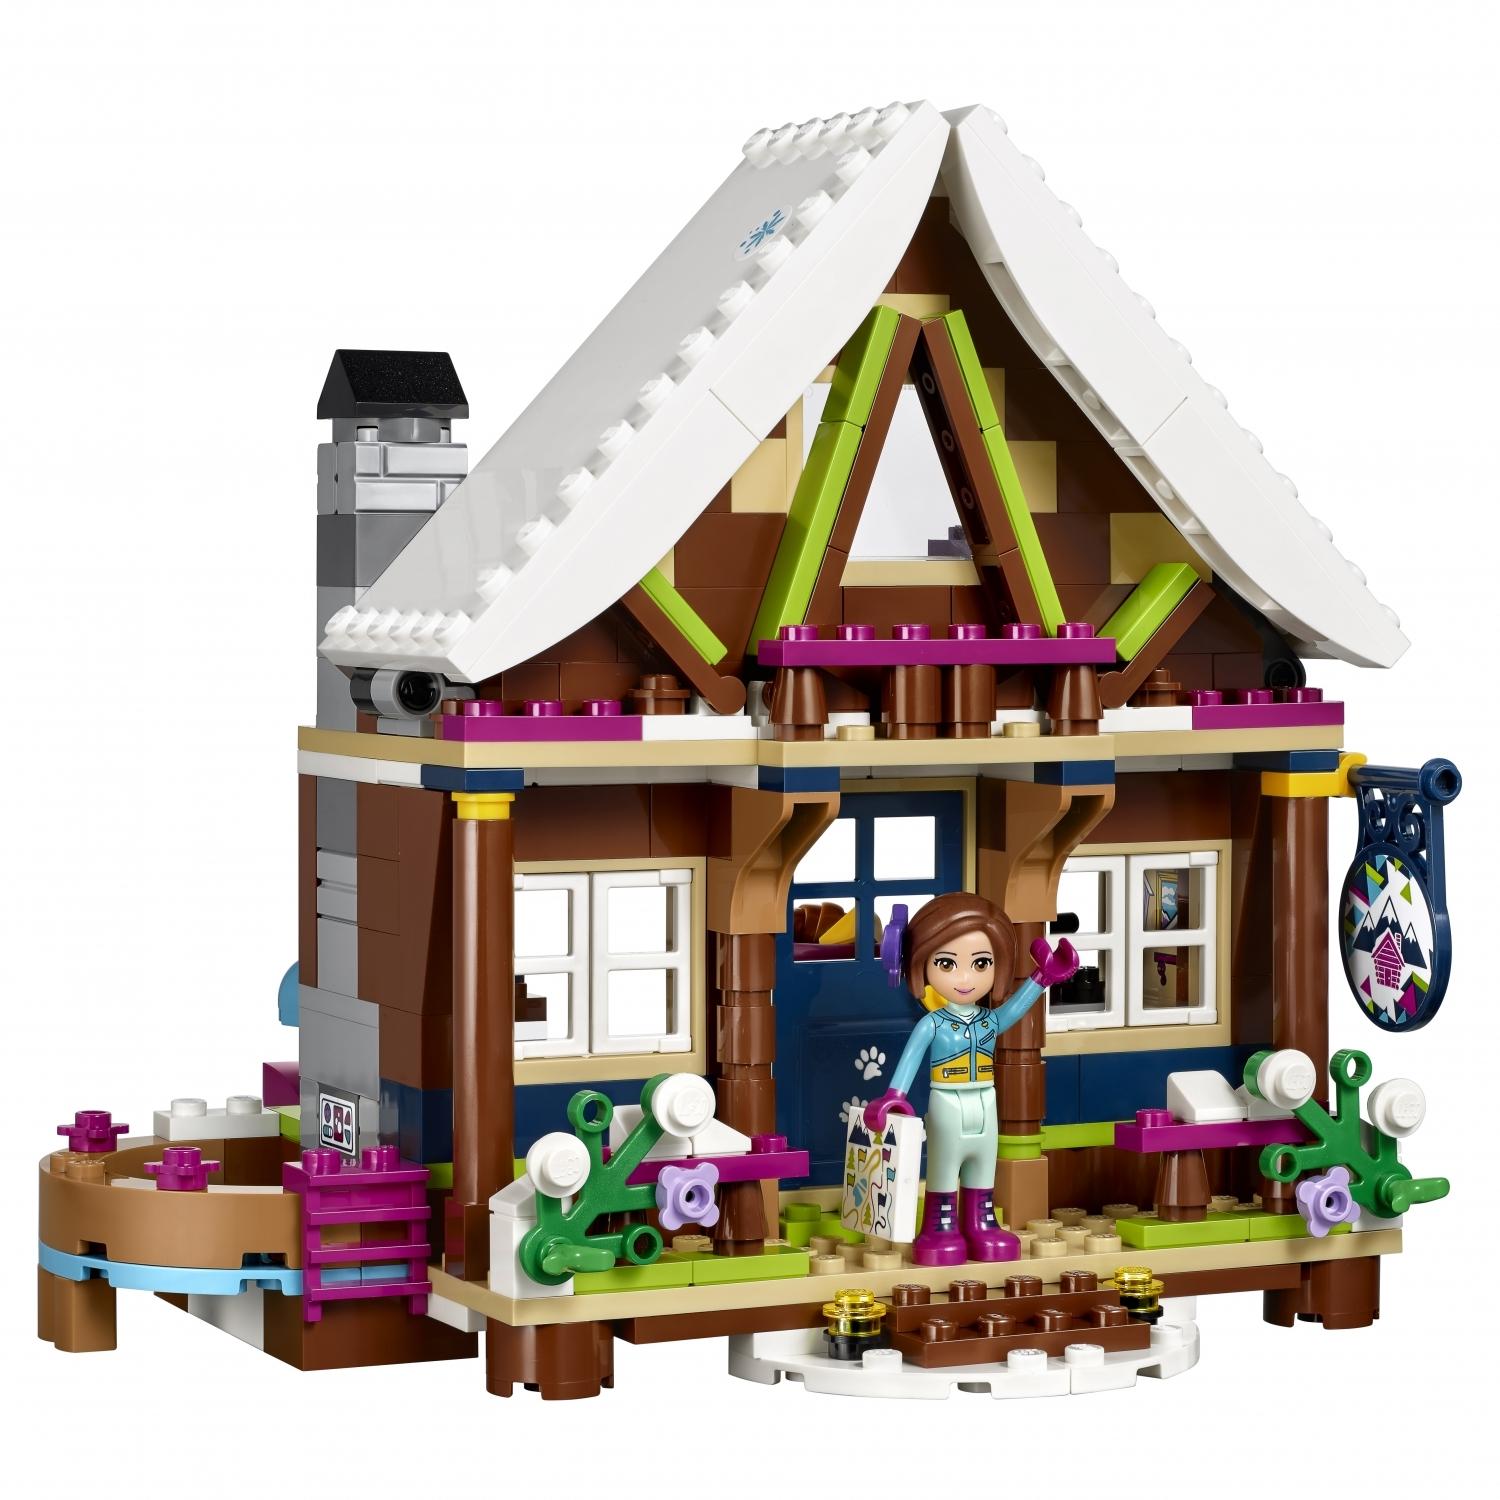 Lego Friends 41323 Горнолыжный курорт: шале